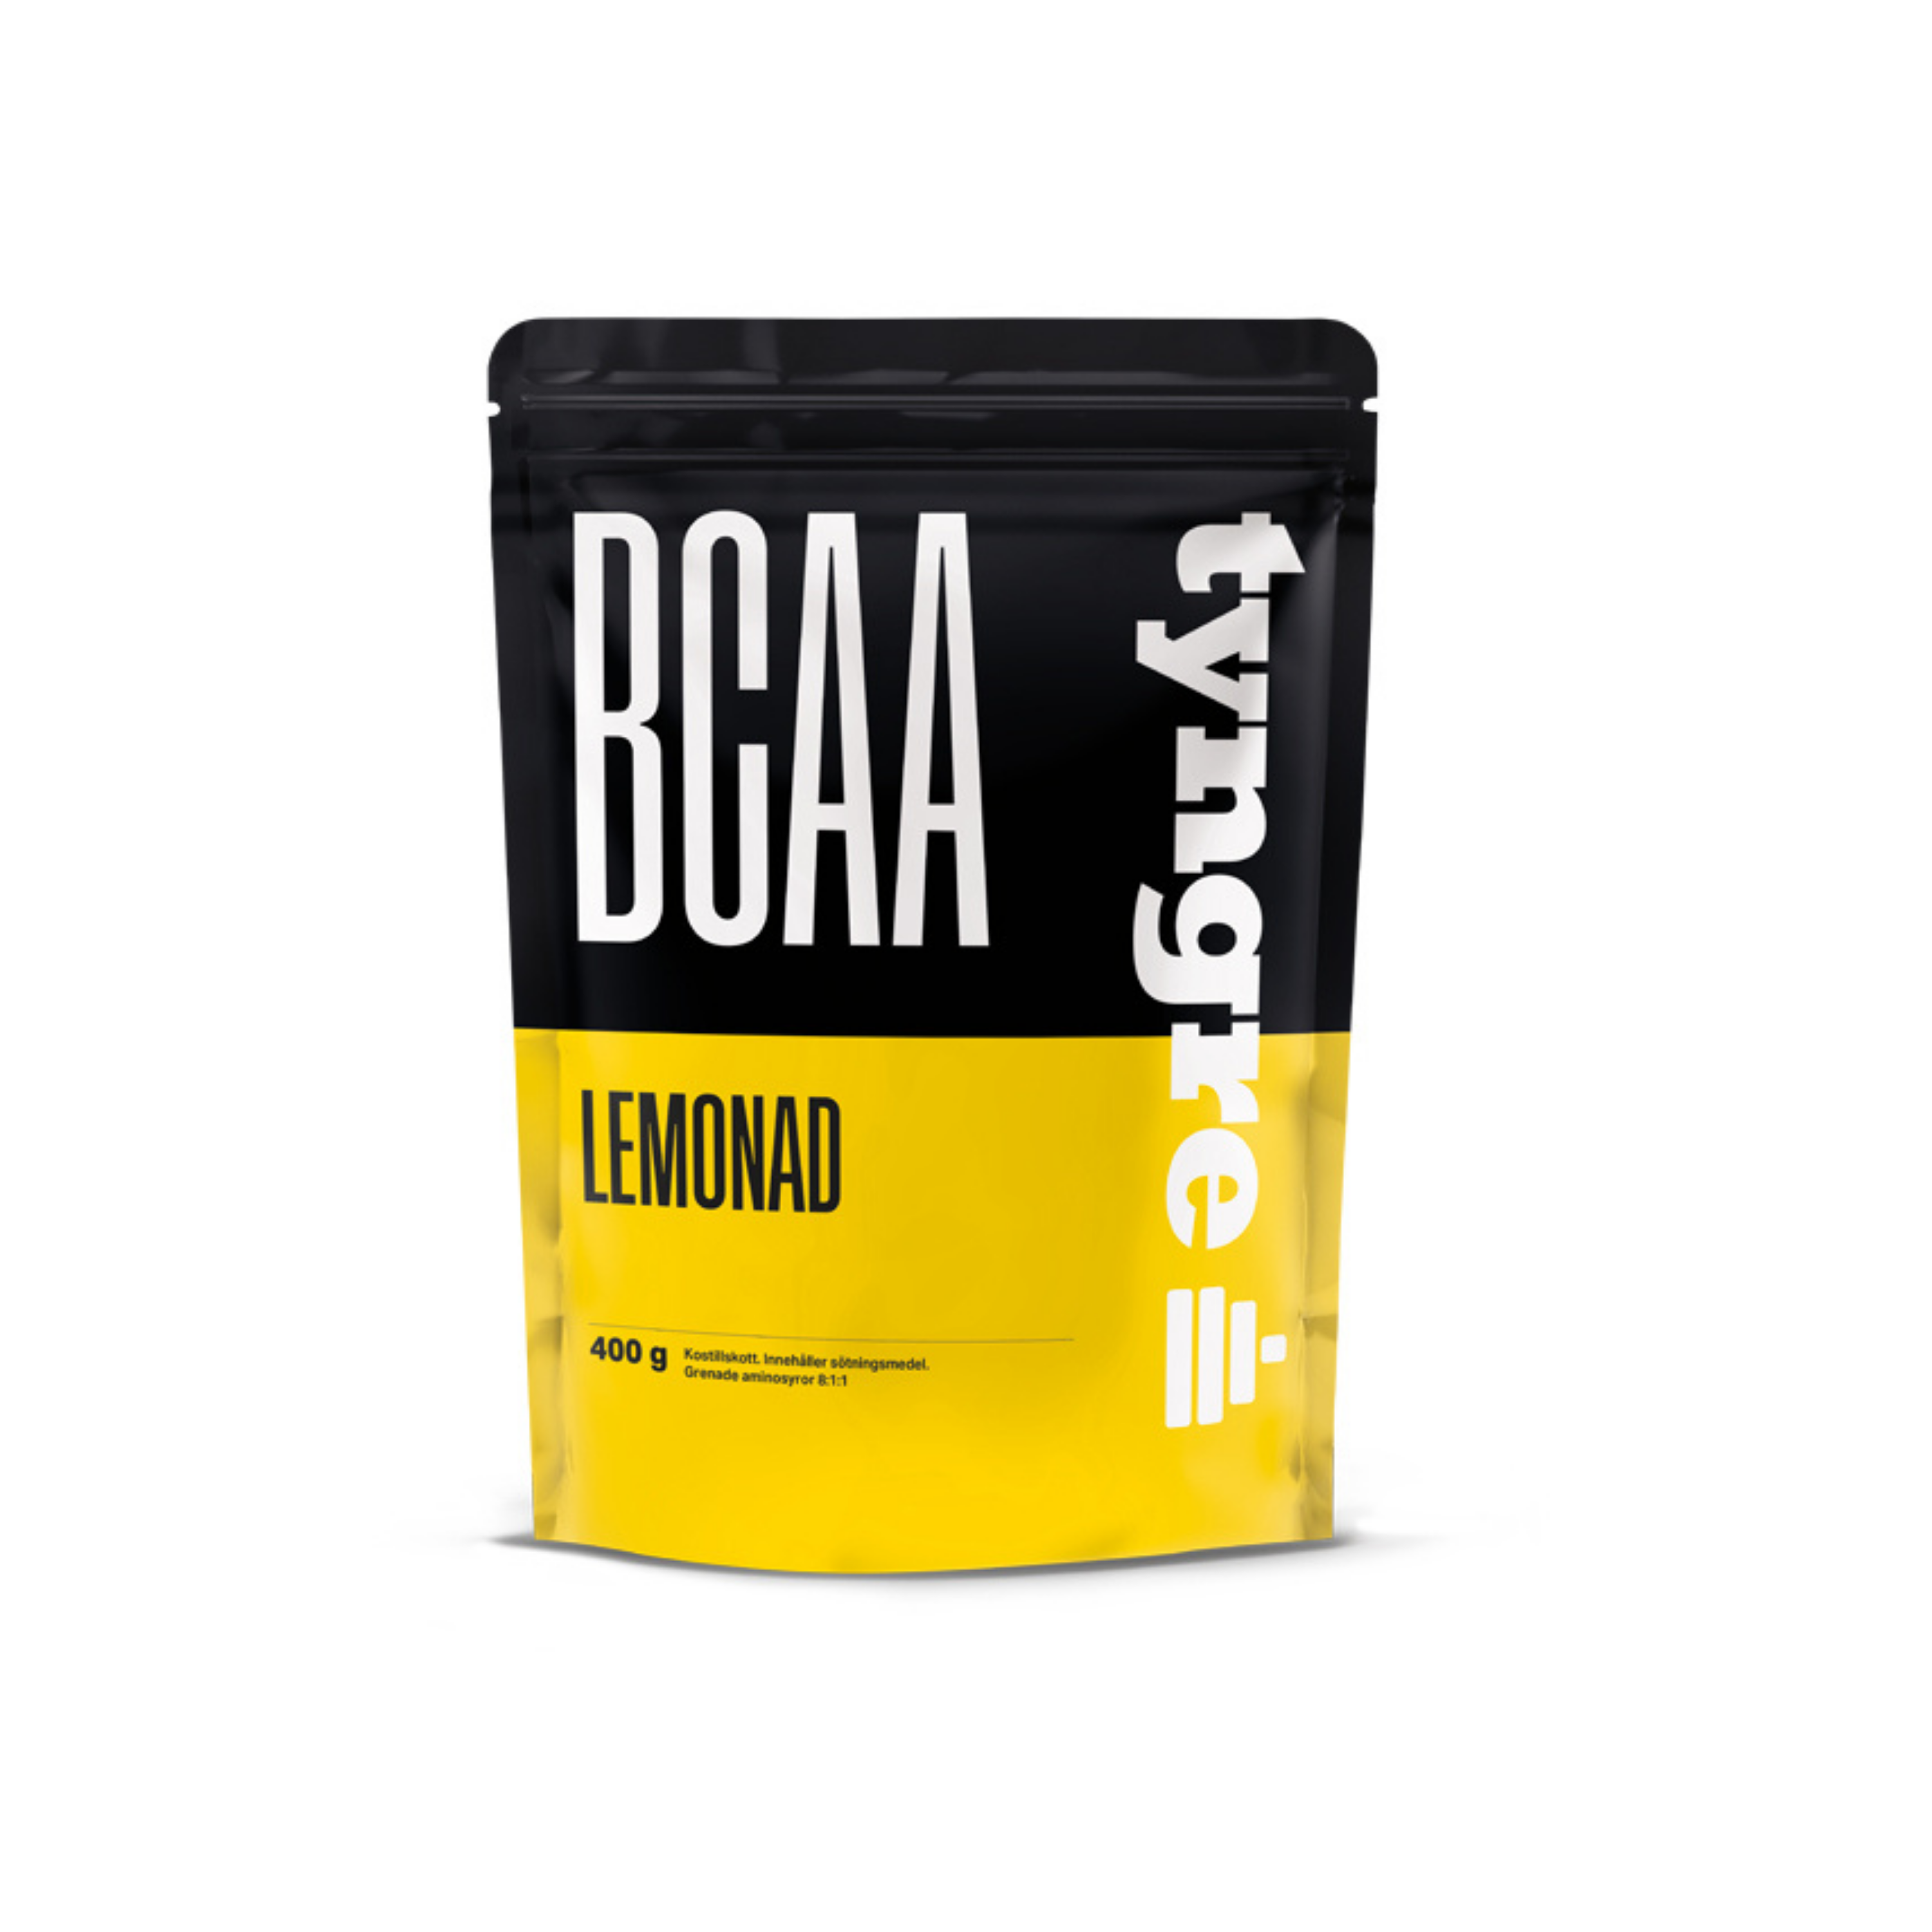 BCAA Lemonad 400g